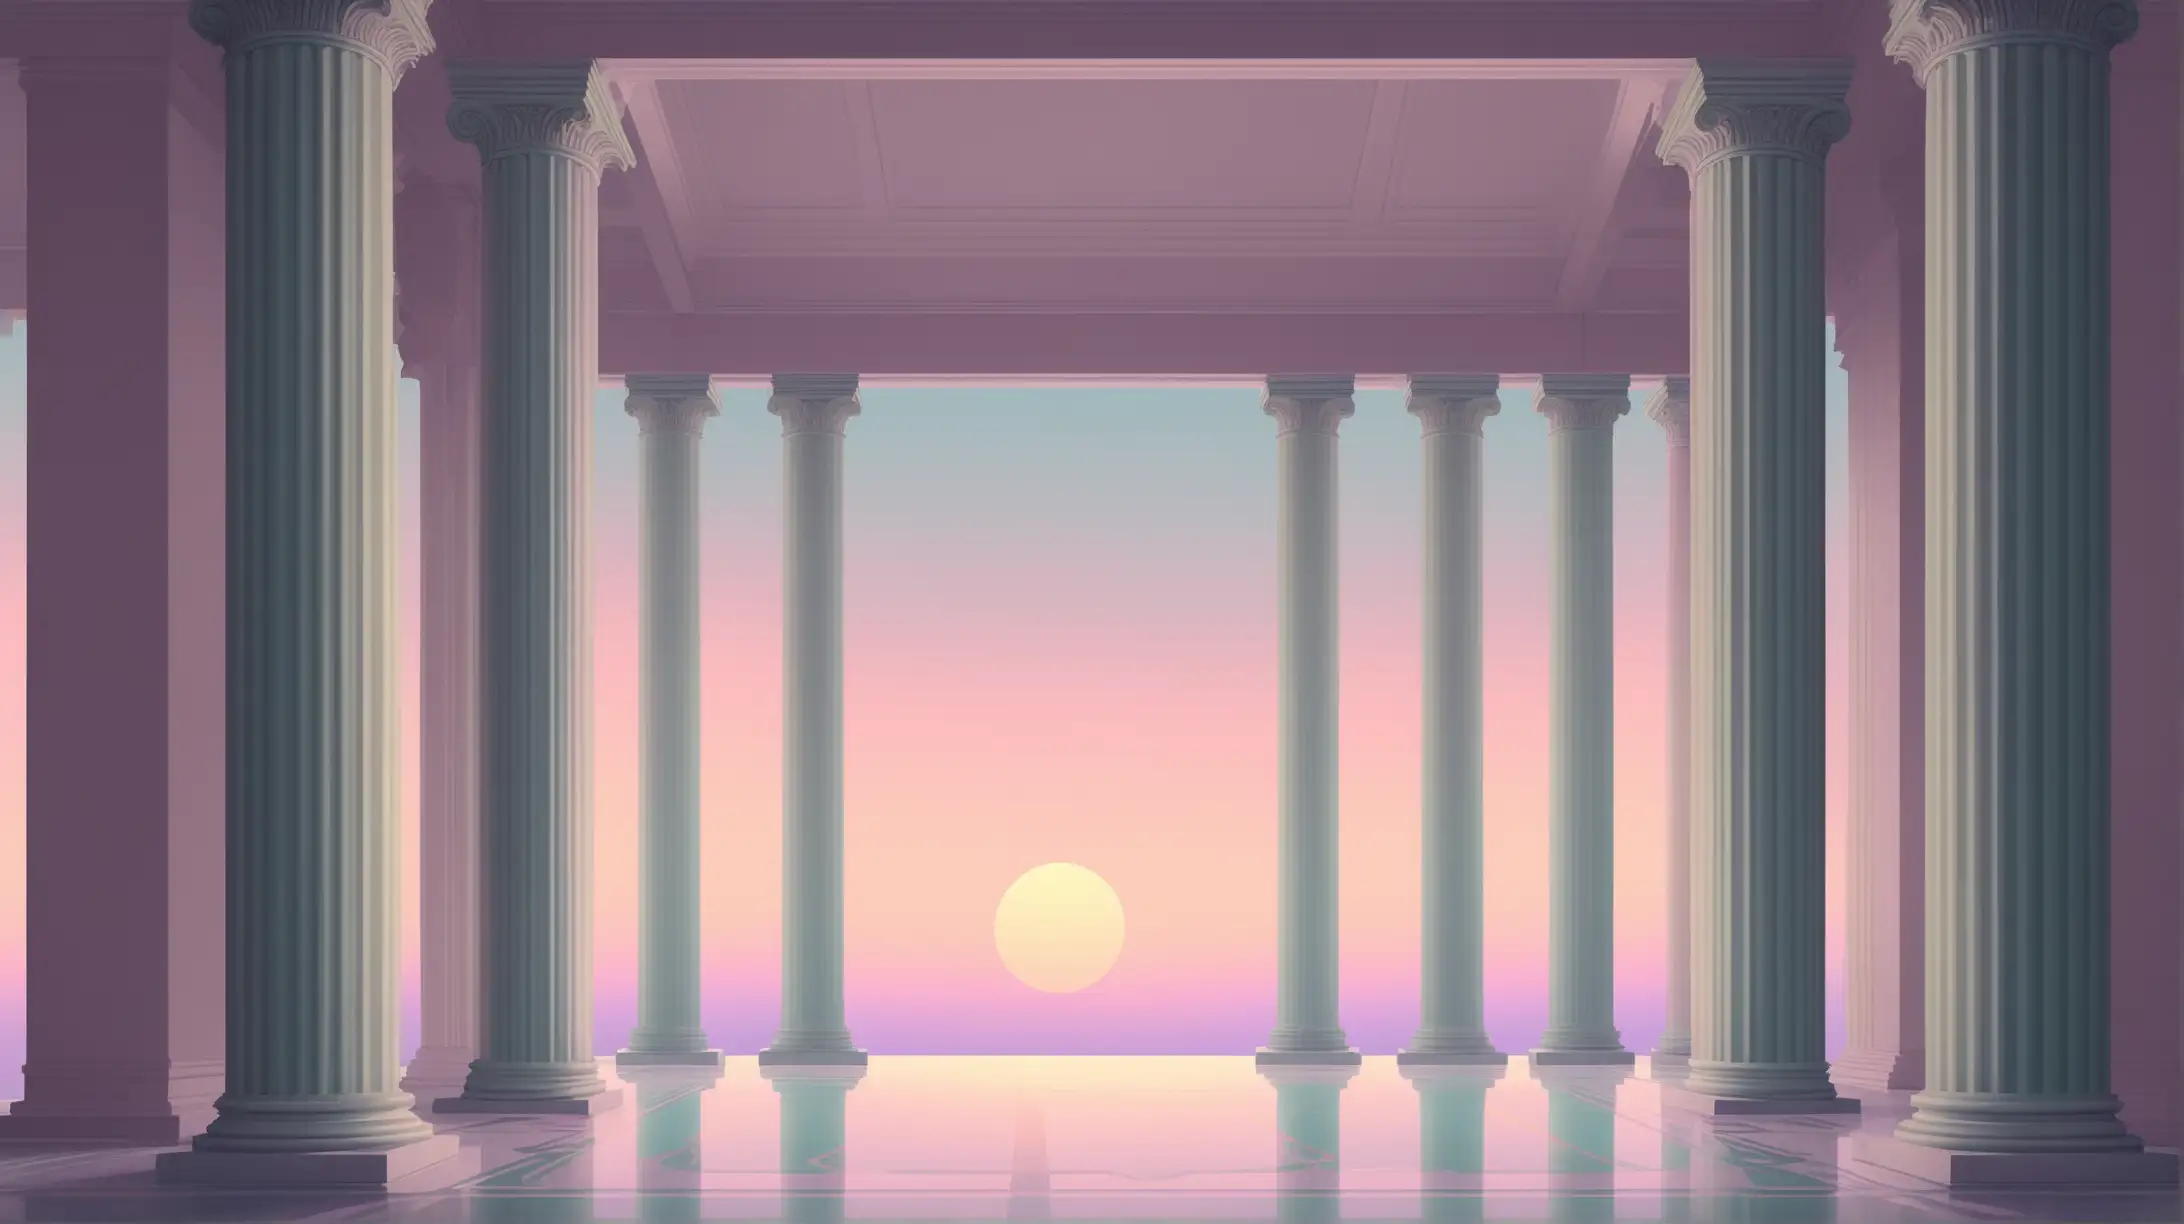 Classical Greek Pillars in Vibrant Dark Pastels